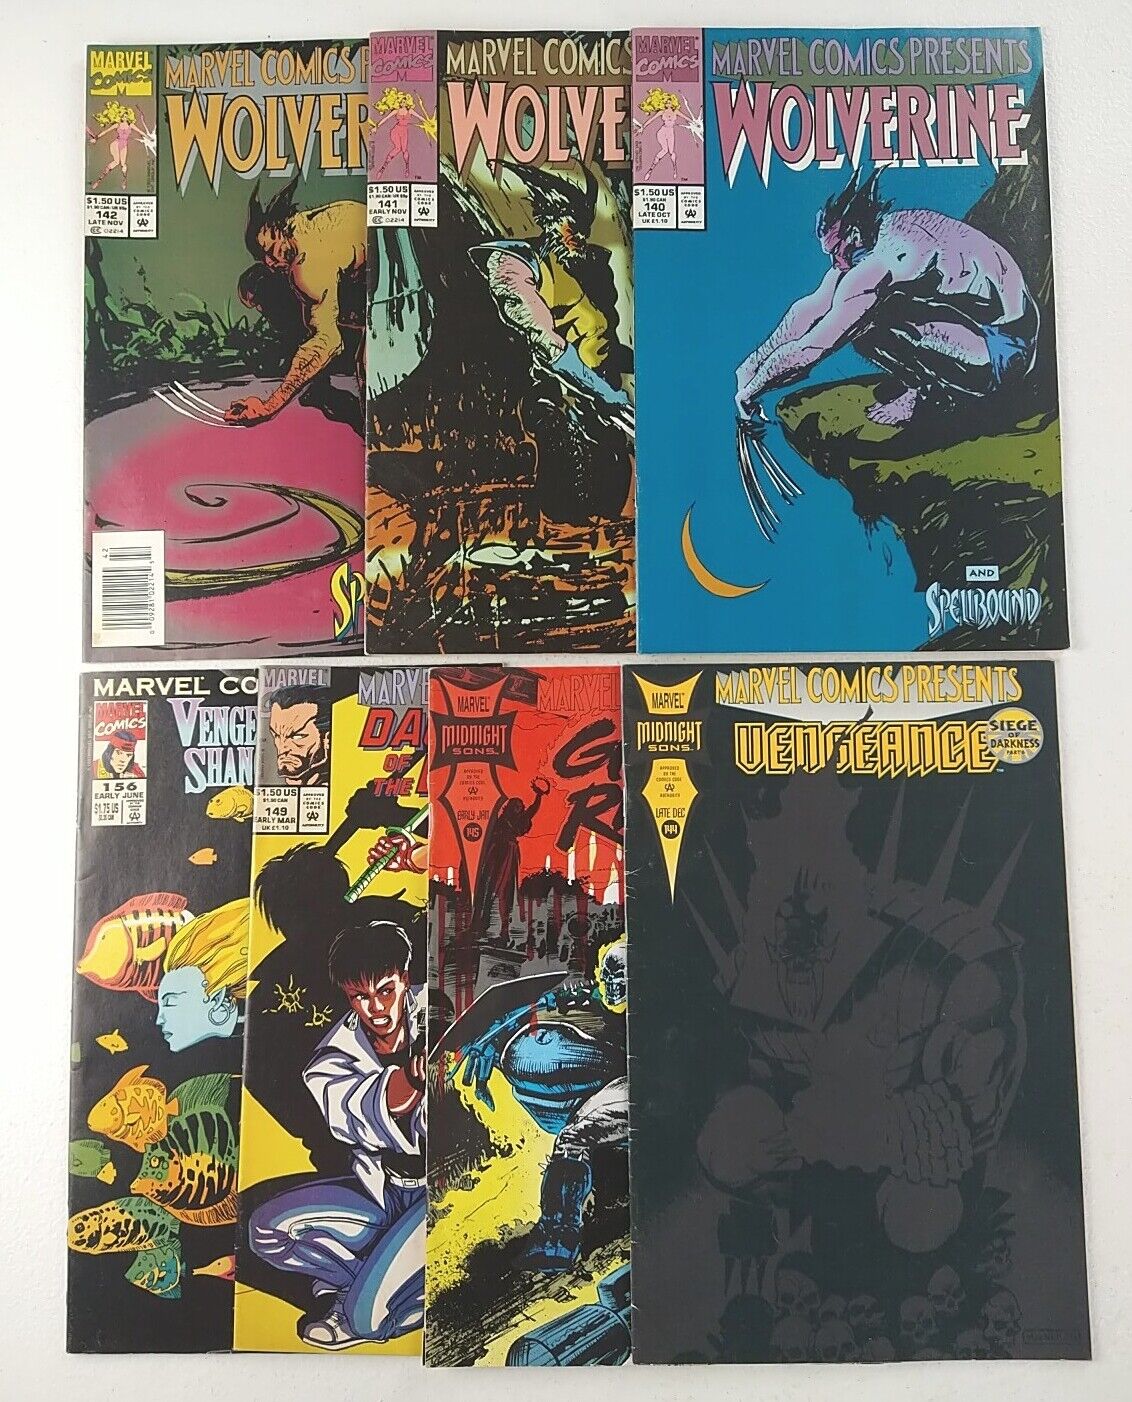 Marvel Comics Presents Wolverine #140 141 142 144 145 149 156 Lot (1993)